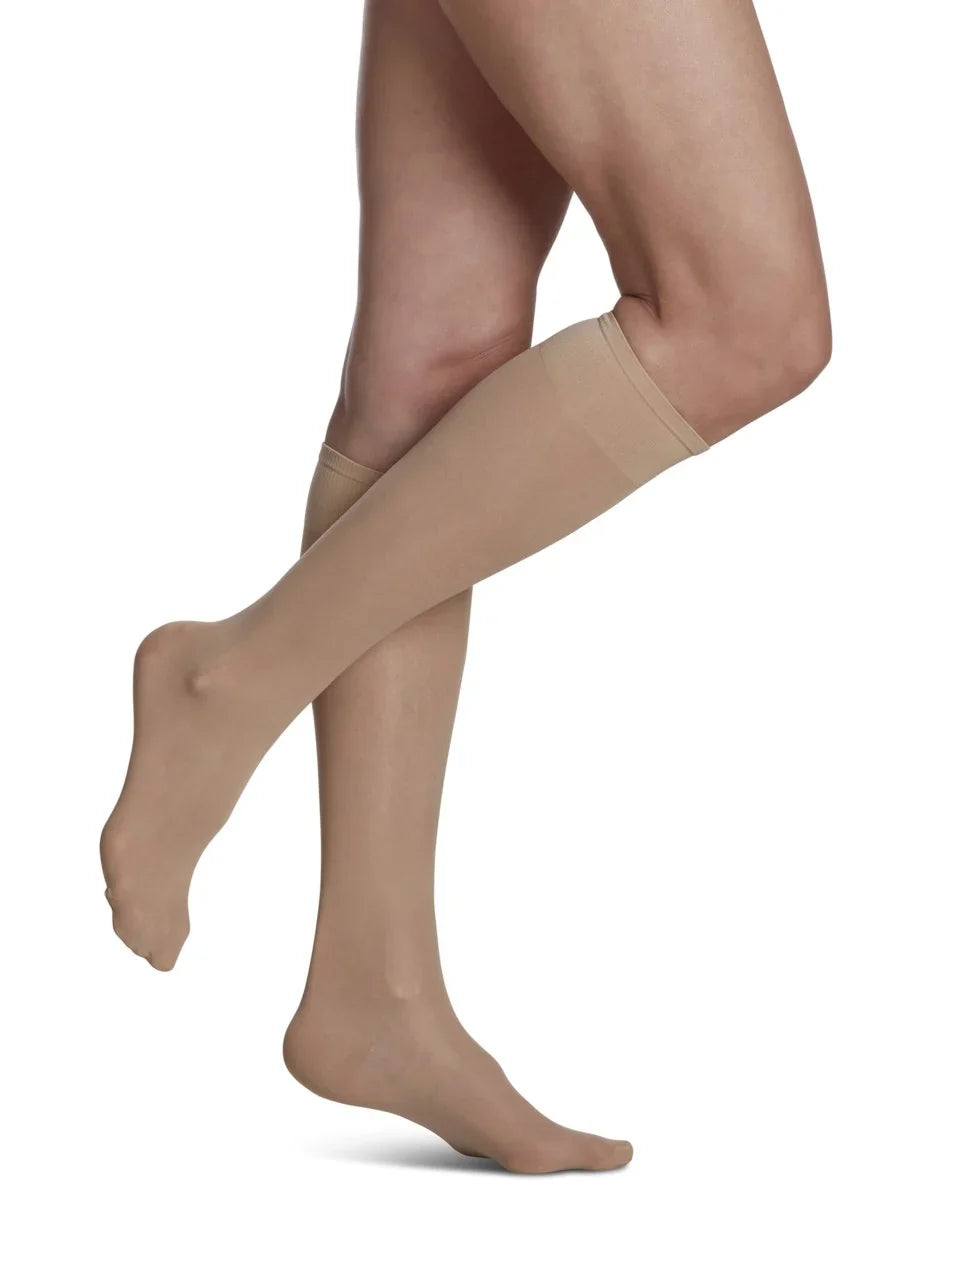 Sigvaris 120 Sheer Fashion Compression Socks 15-20 mmHg Calf High For Women Closed Toe